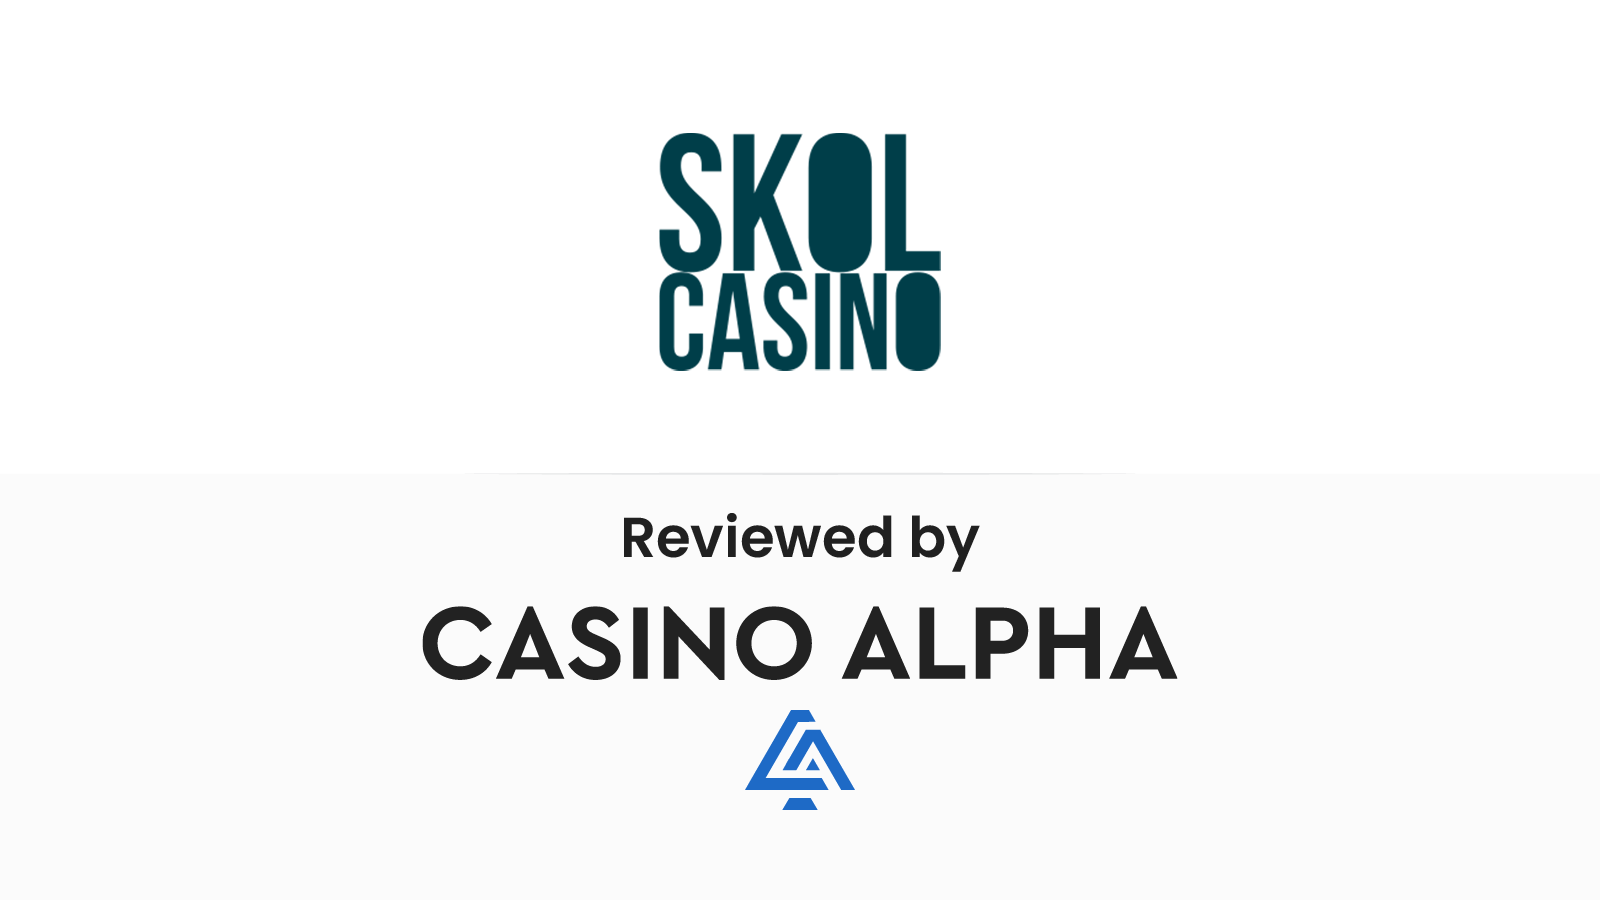 Skol Casino Review & Offers